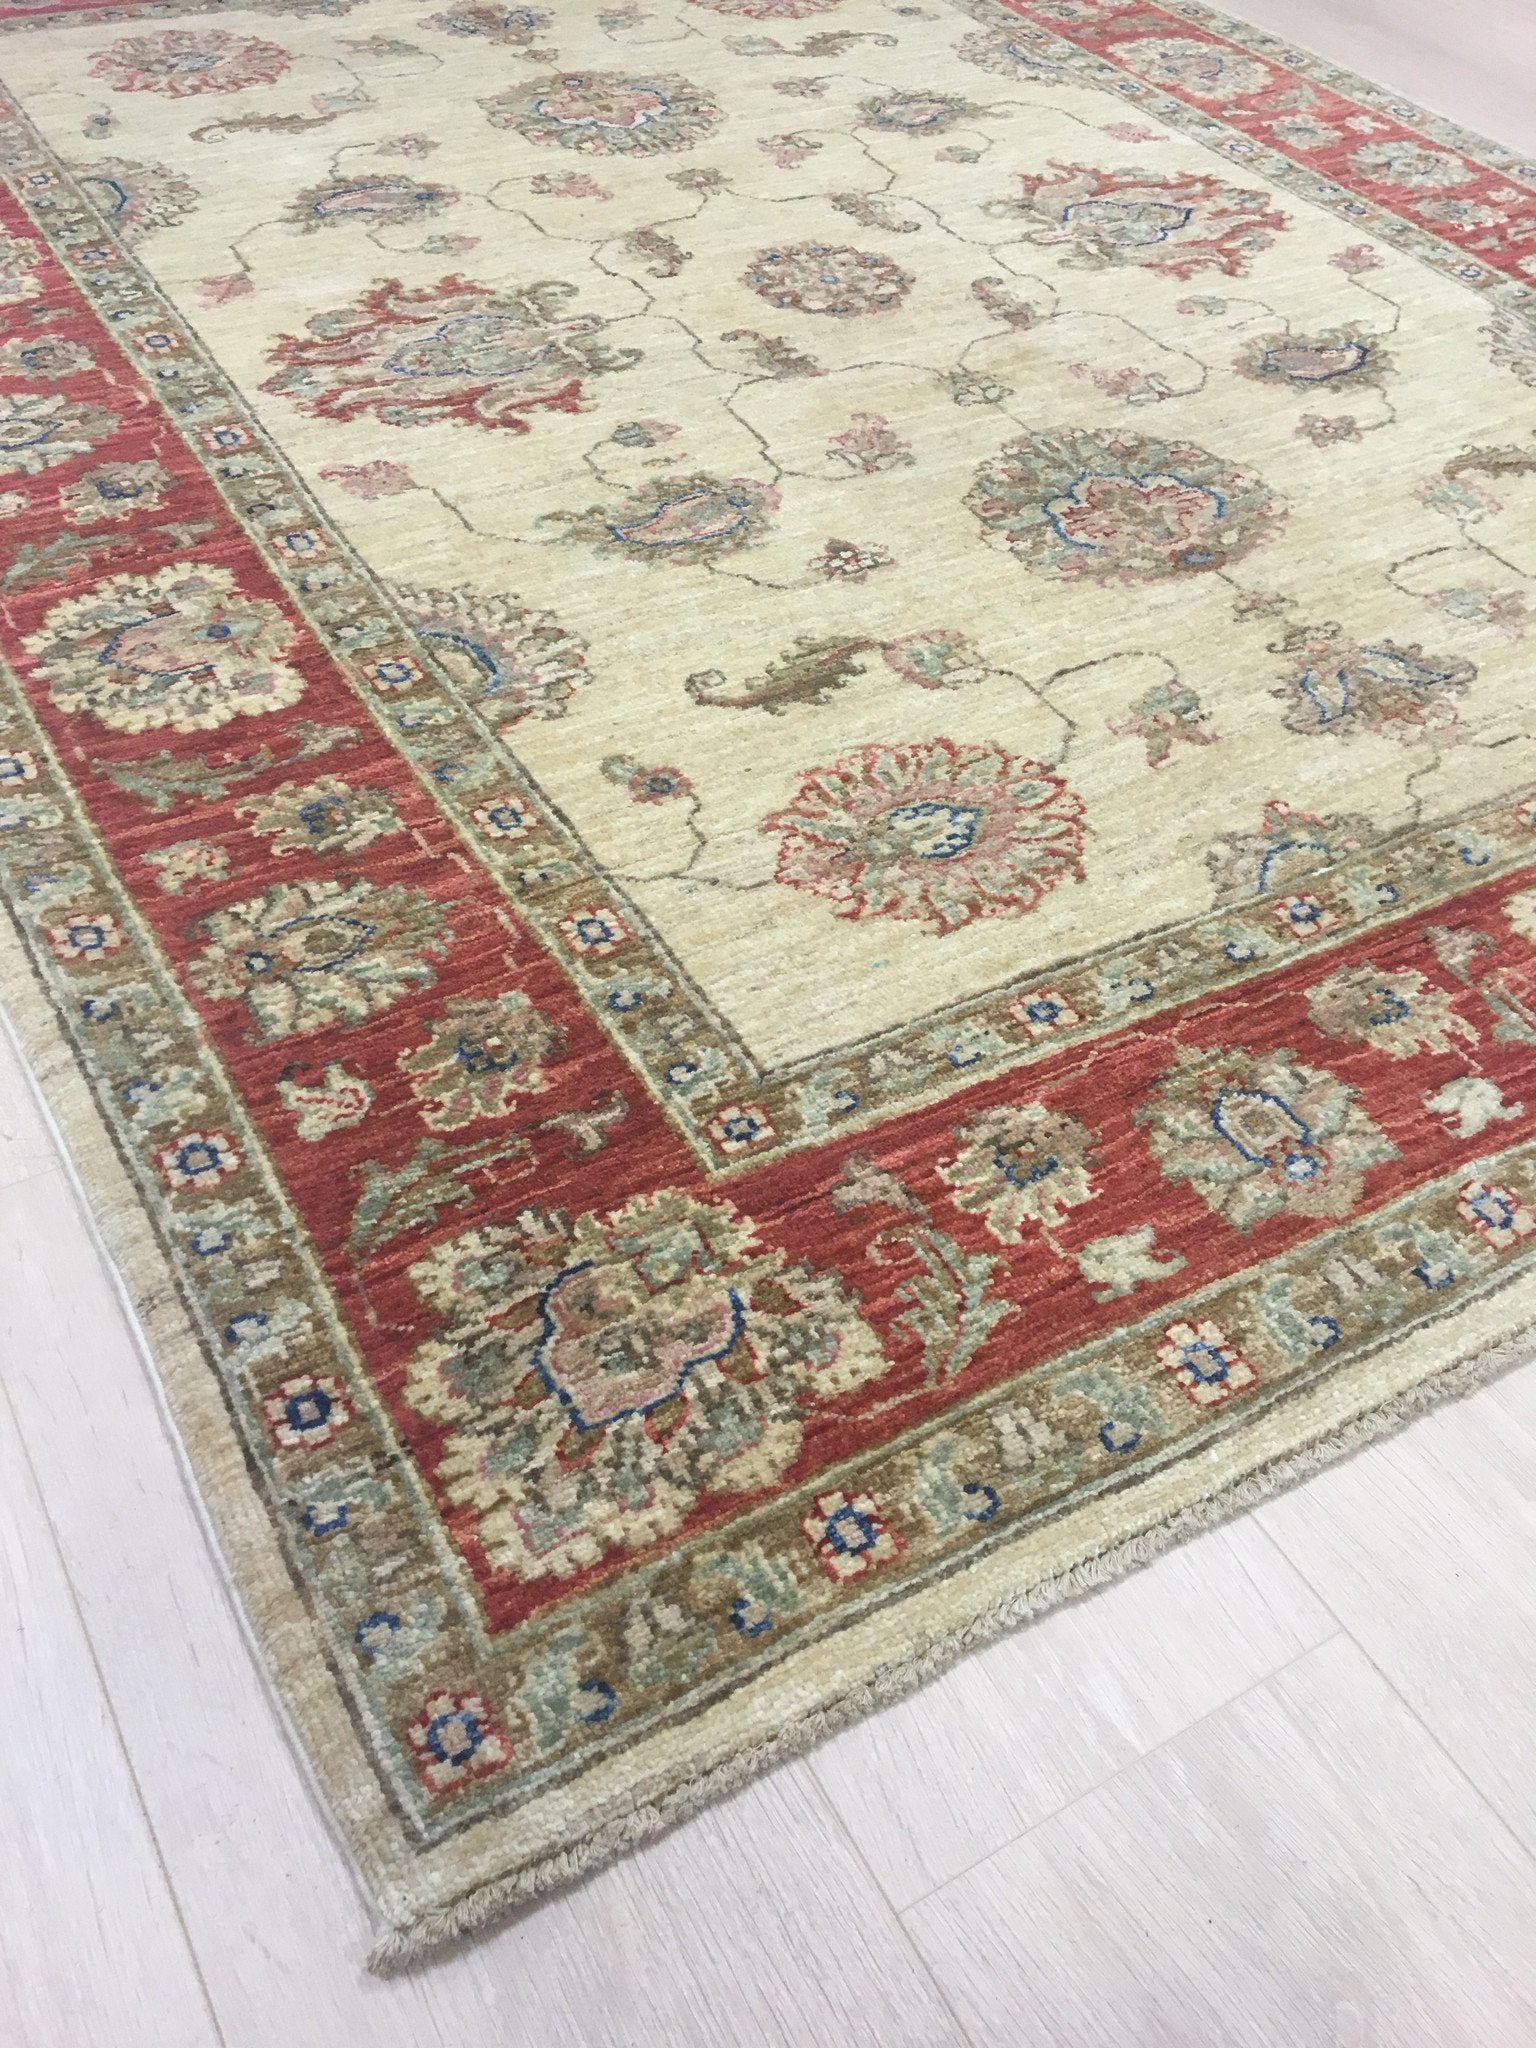 Chobi 198x154 - Omid Carpets